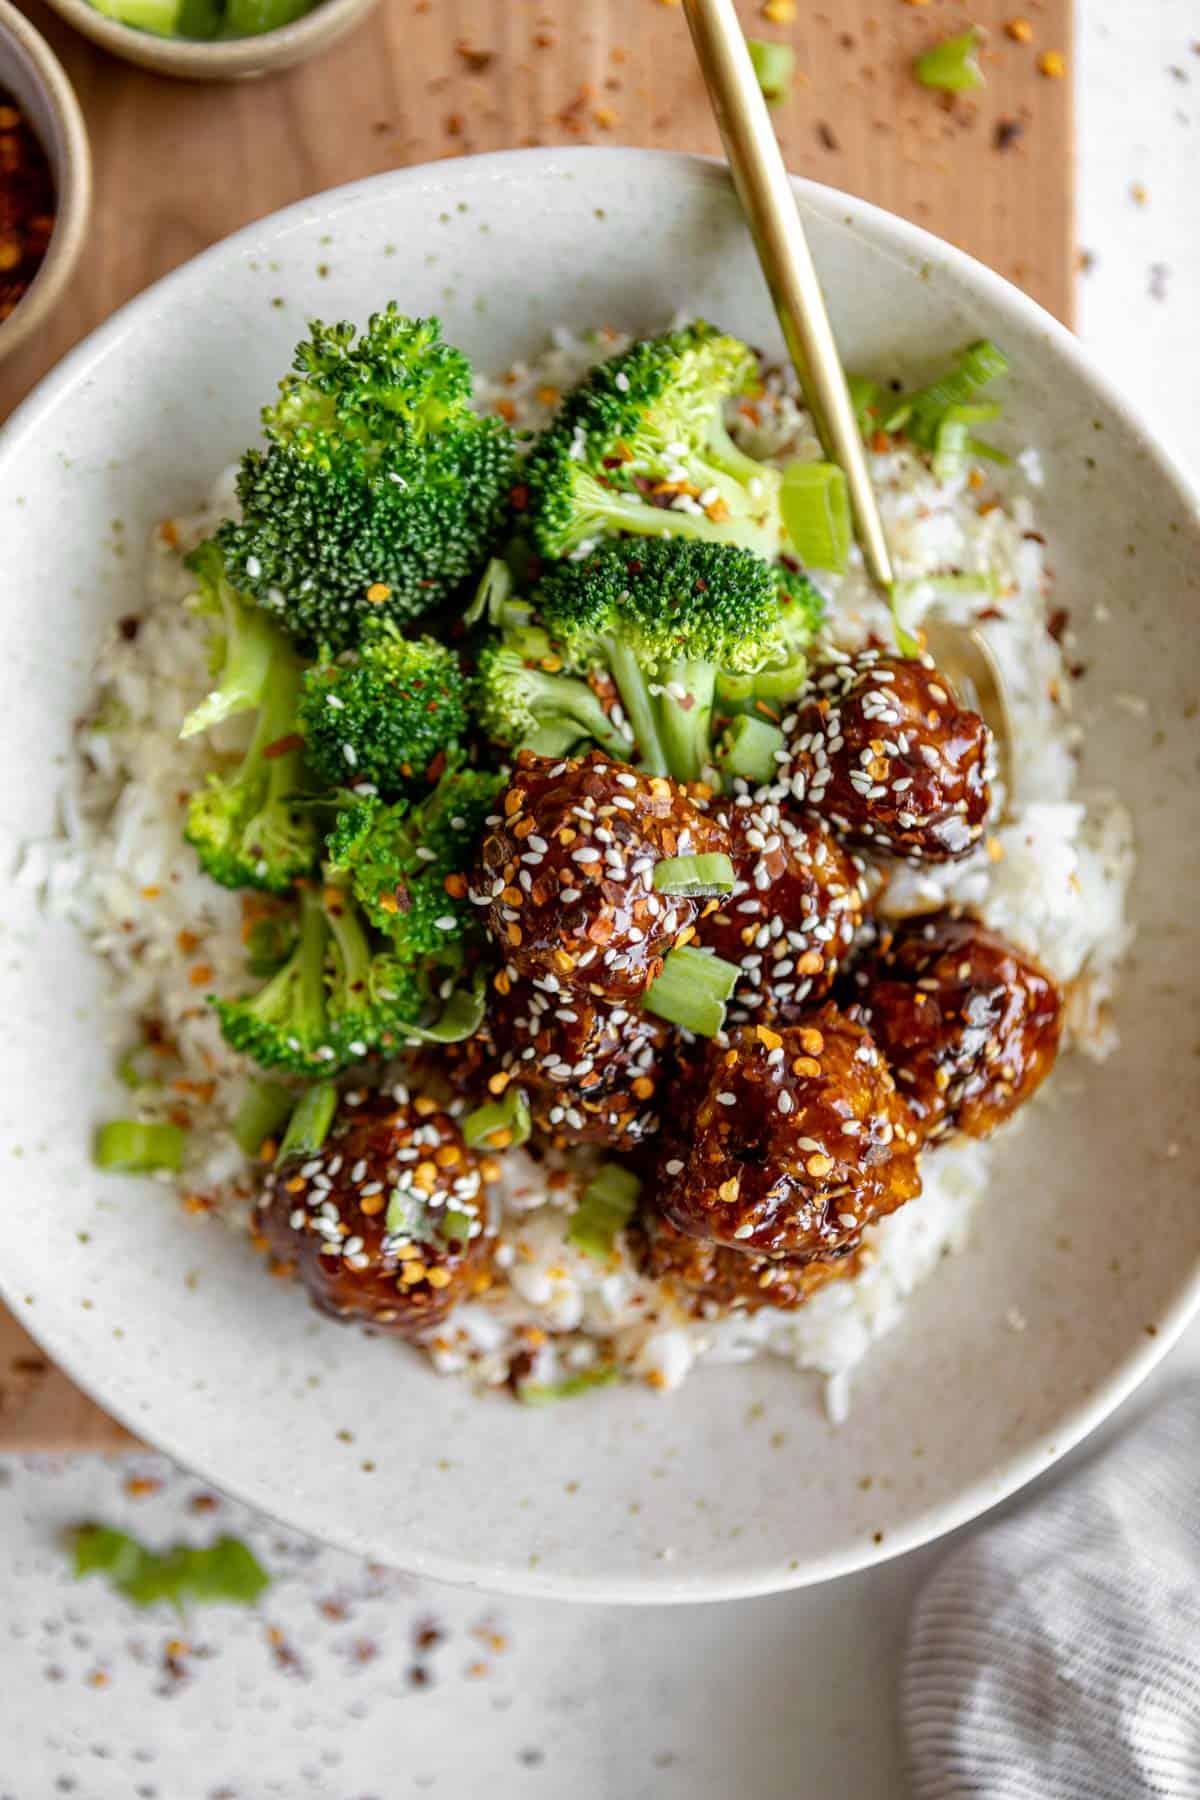 teriyaki chicken meatballs with broccoli and rice